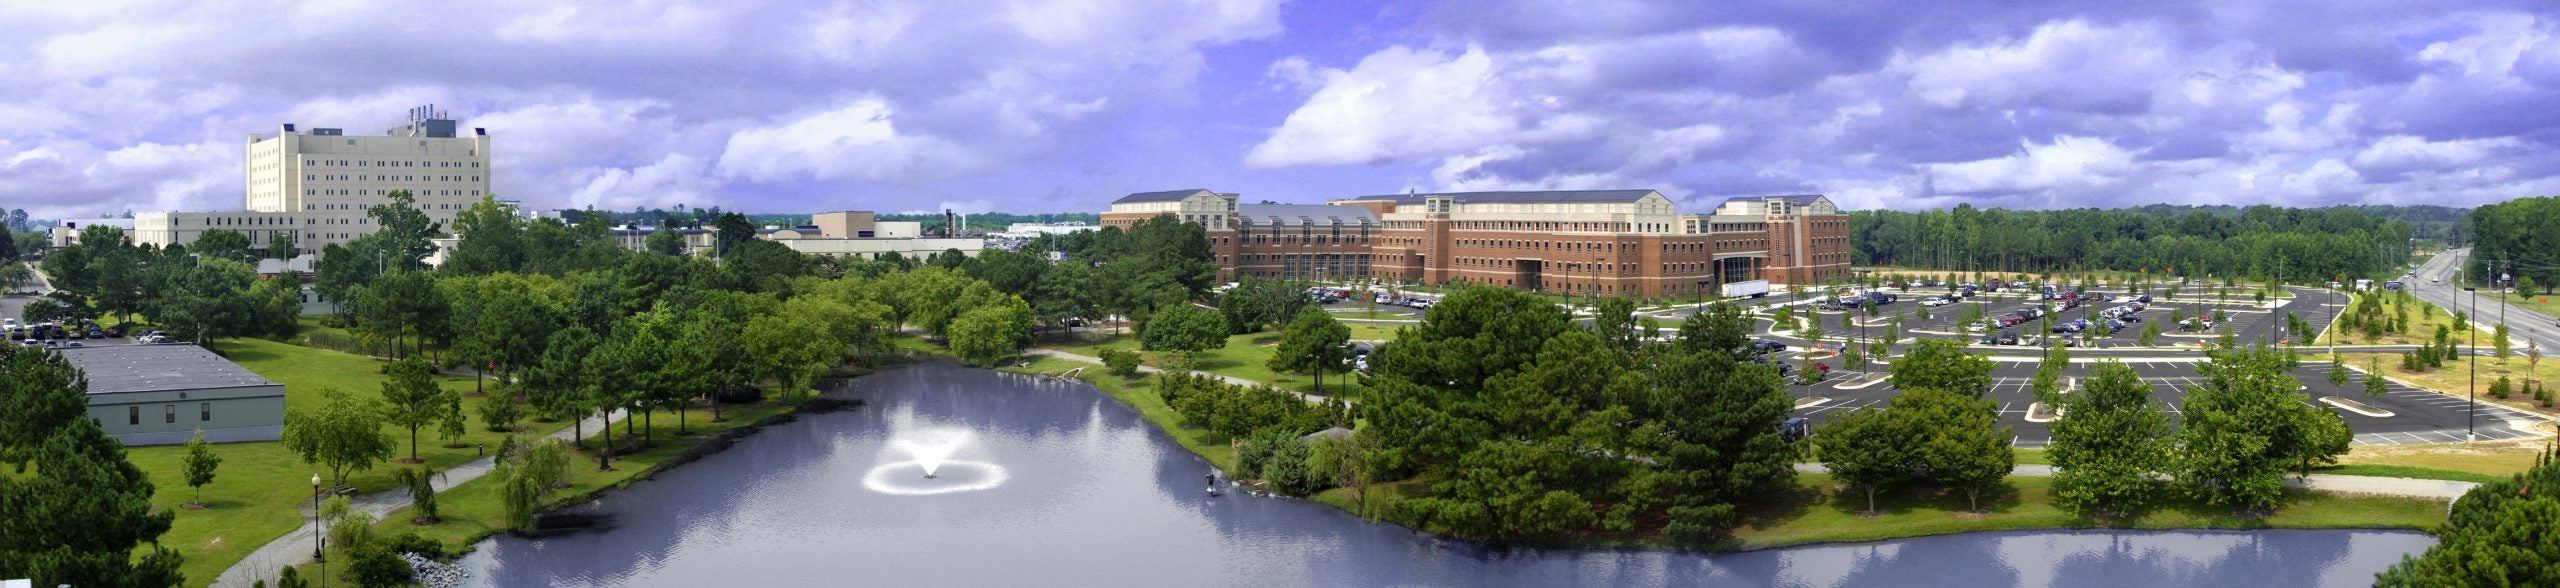 Aerial view of Health Sciences Campus